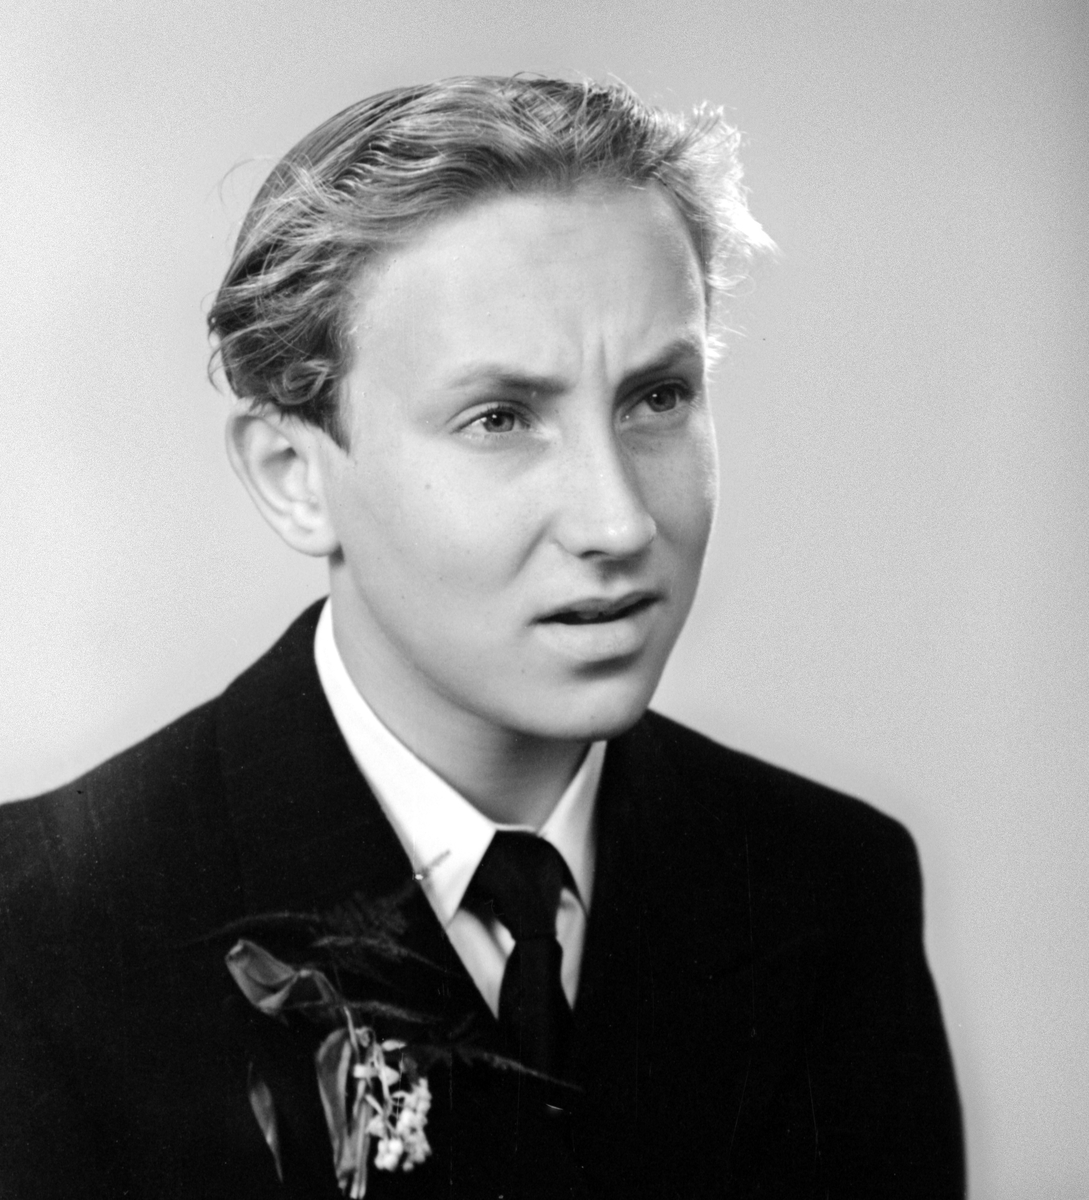 Konfirmanden Bertil Abrahamsson. Foto i maj 1950.
